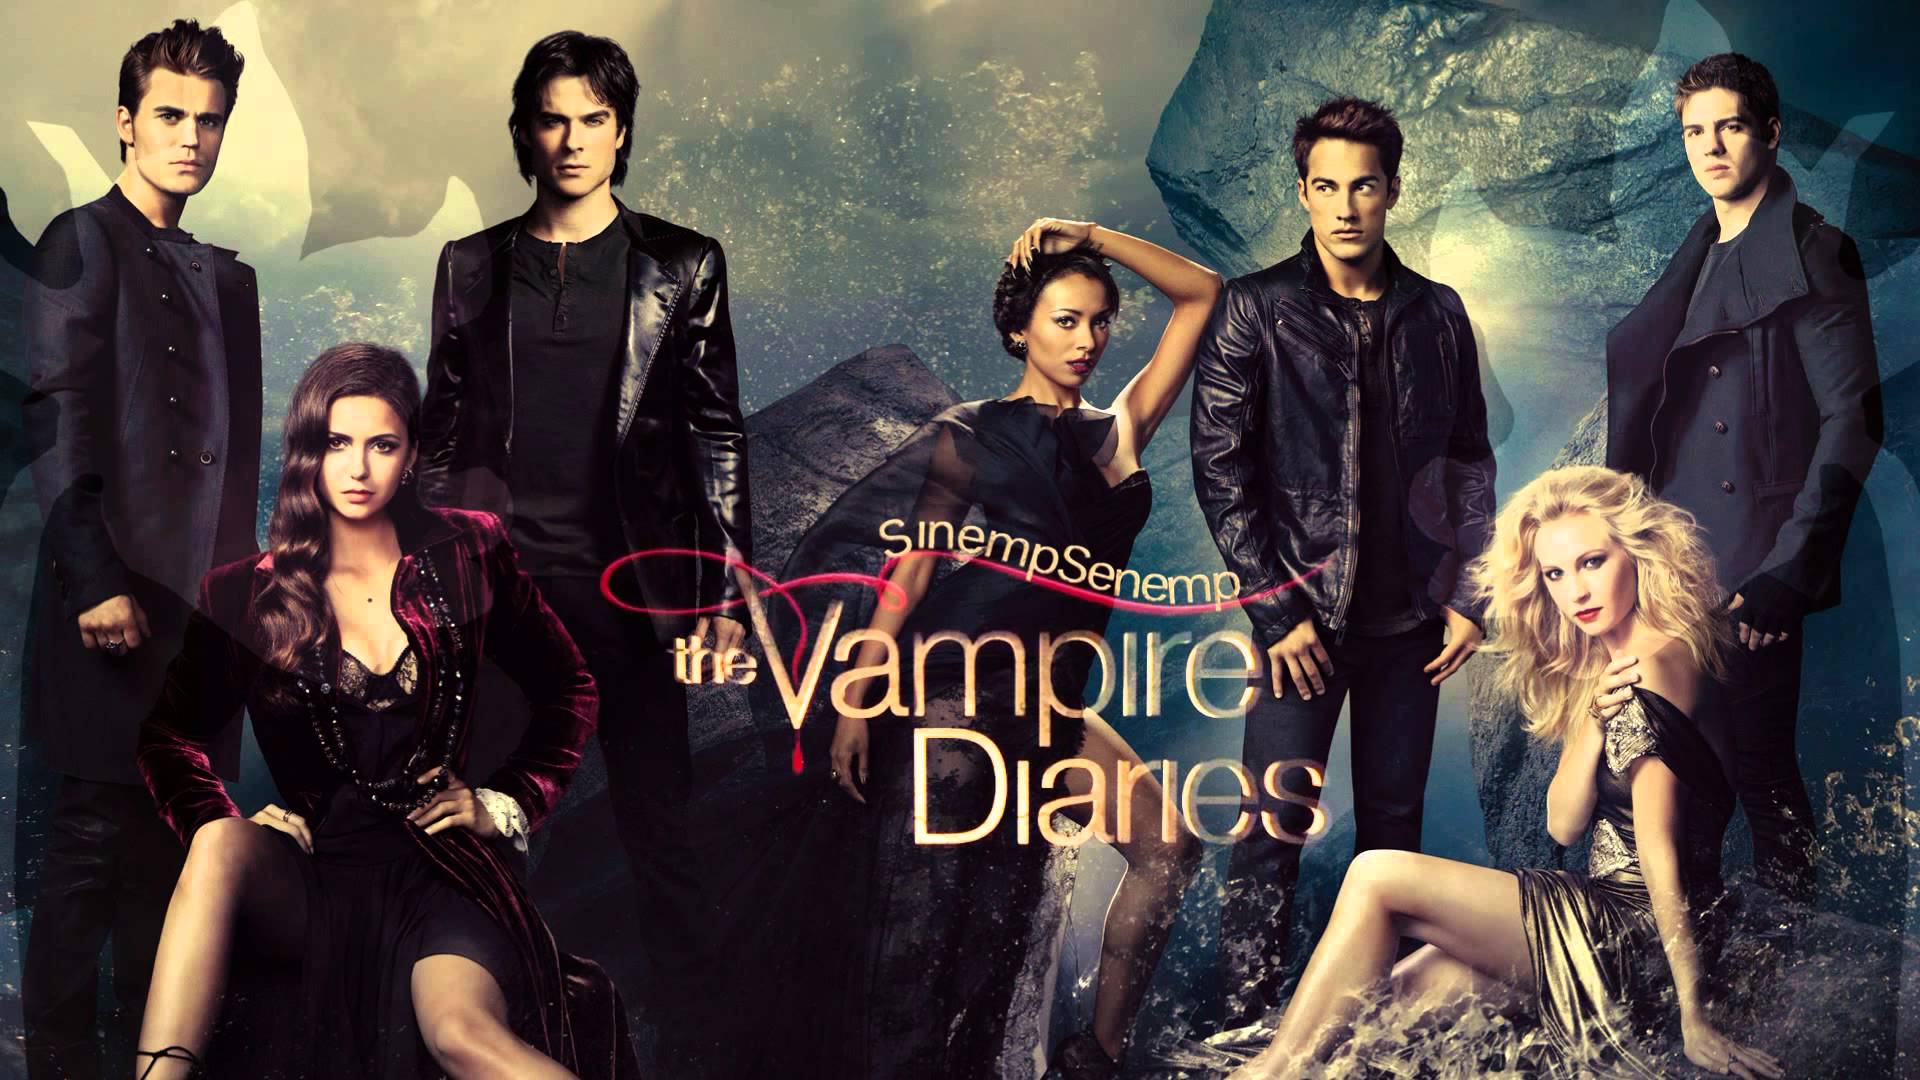 Vampire diaries serie | Wikia Series de Netflix | Fandom